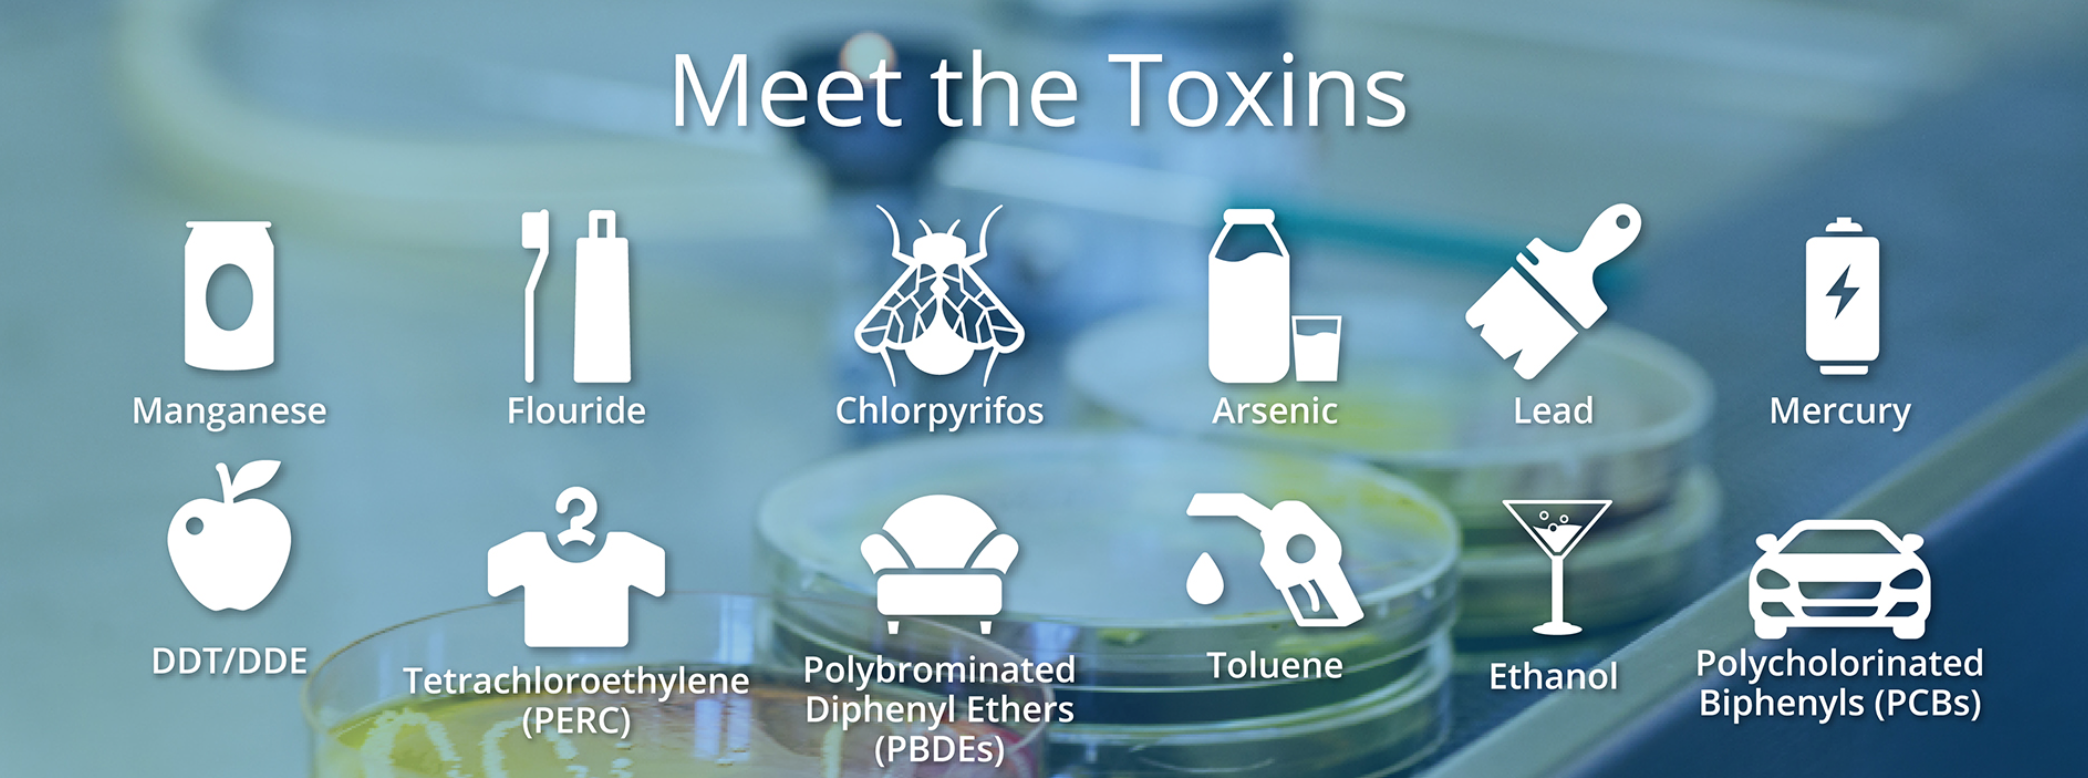 meet the toxins.png